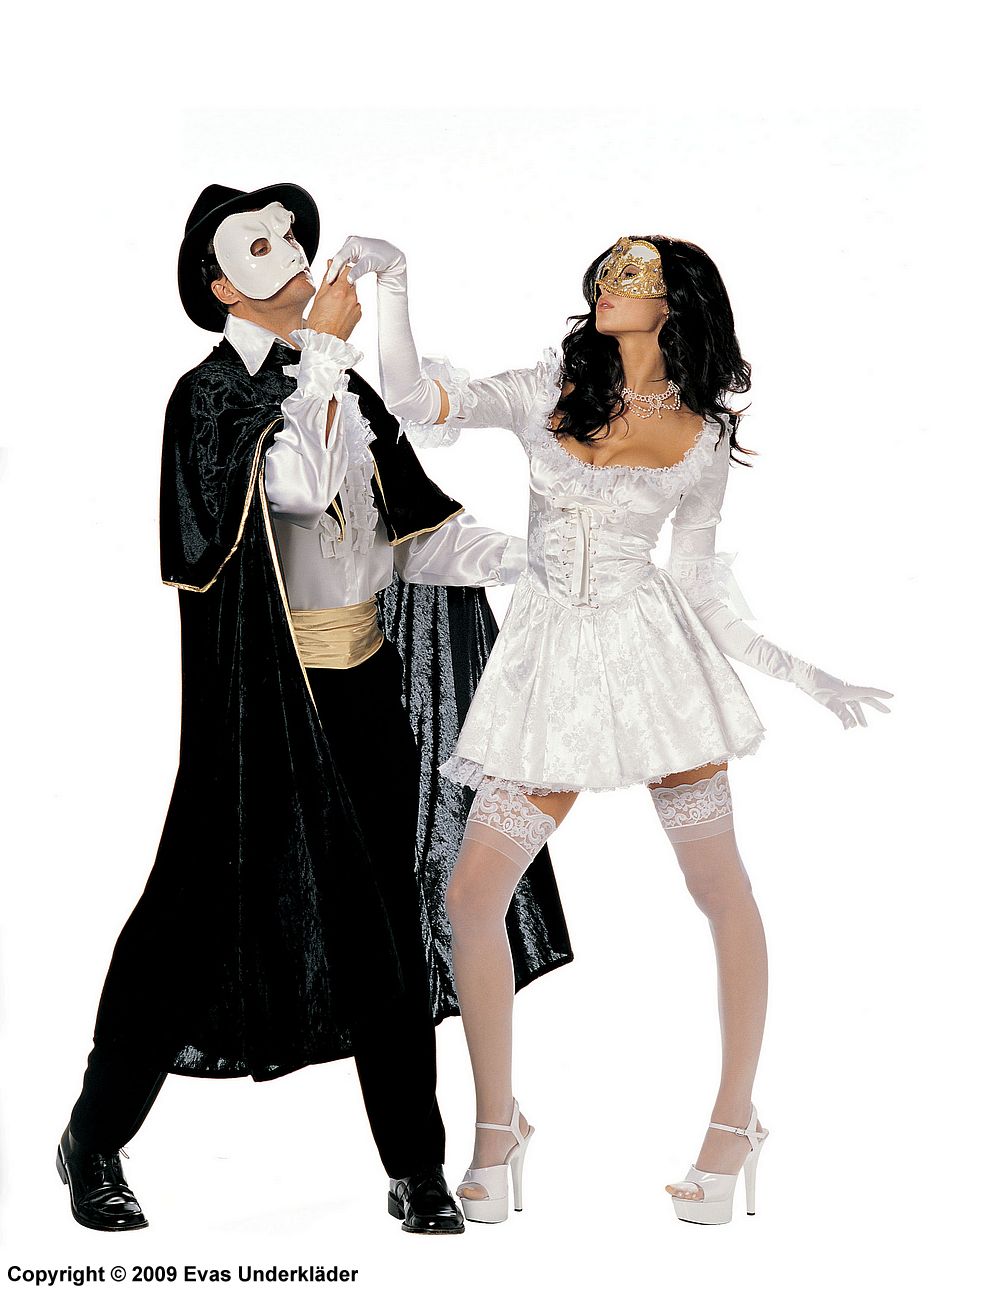 Phantom of the Opera costume